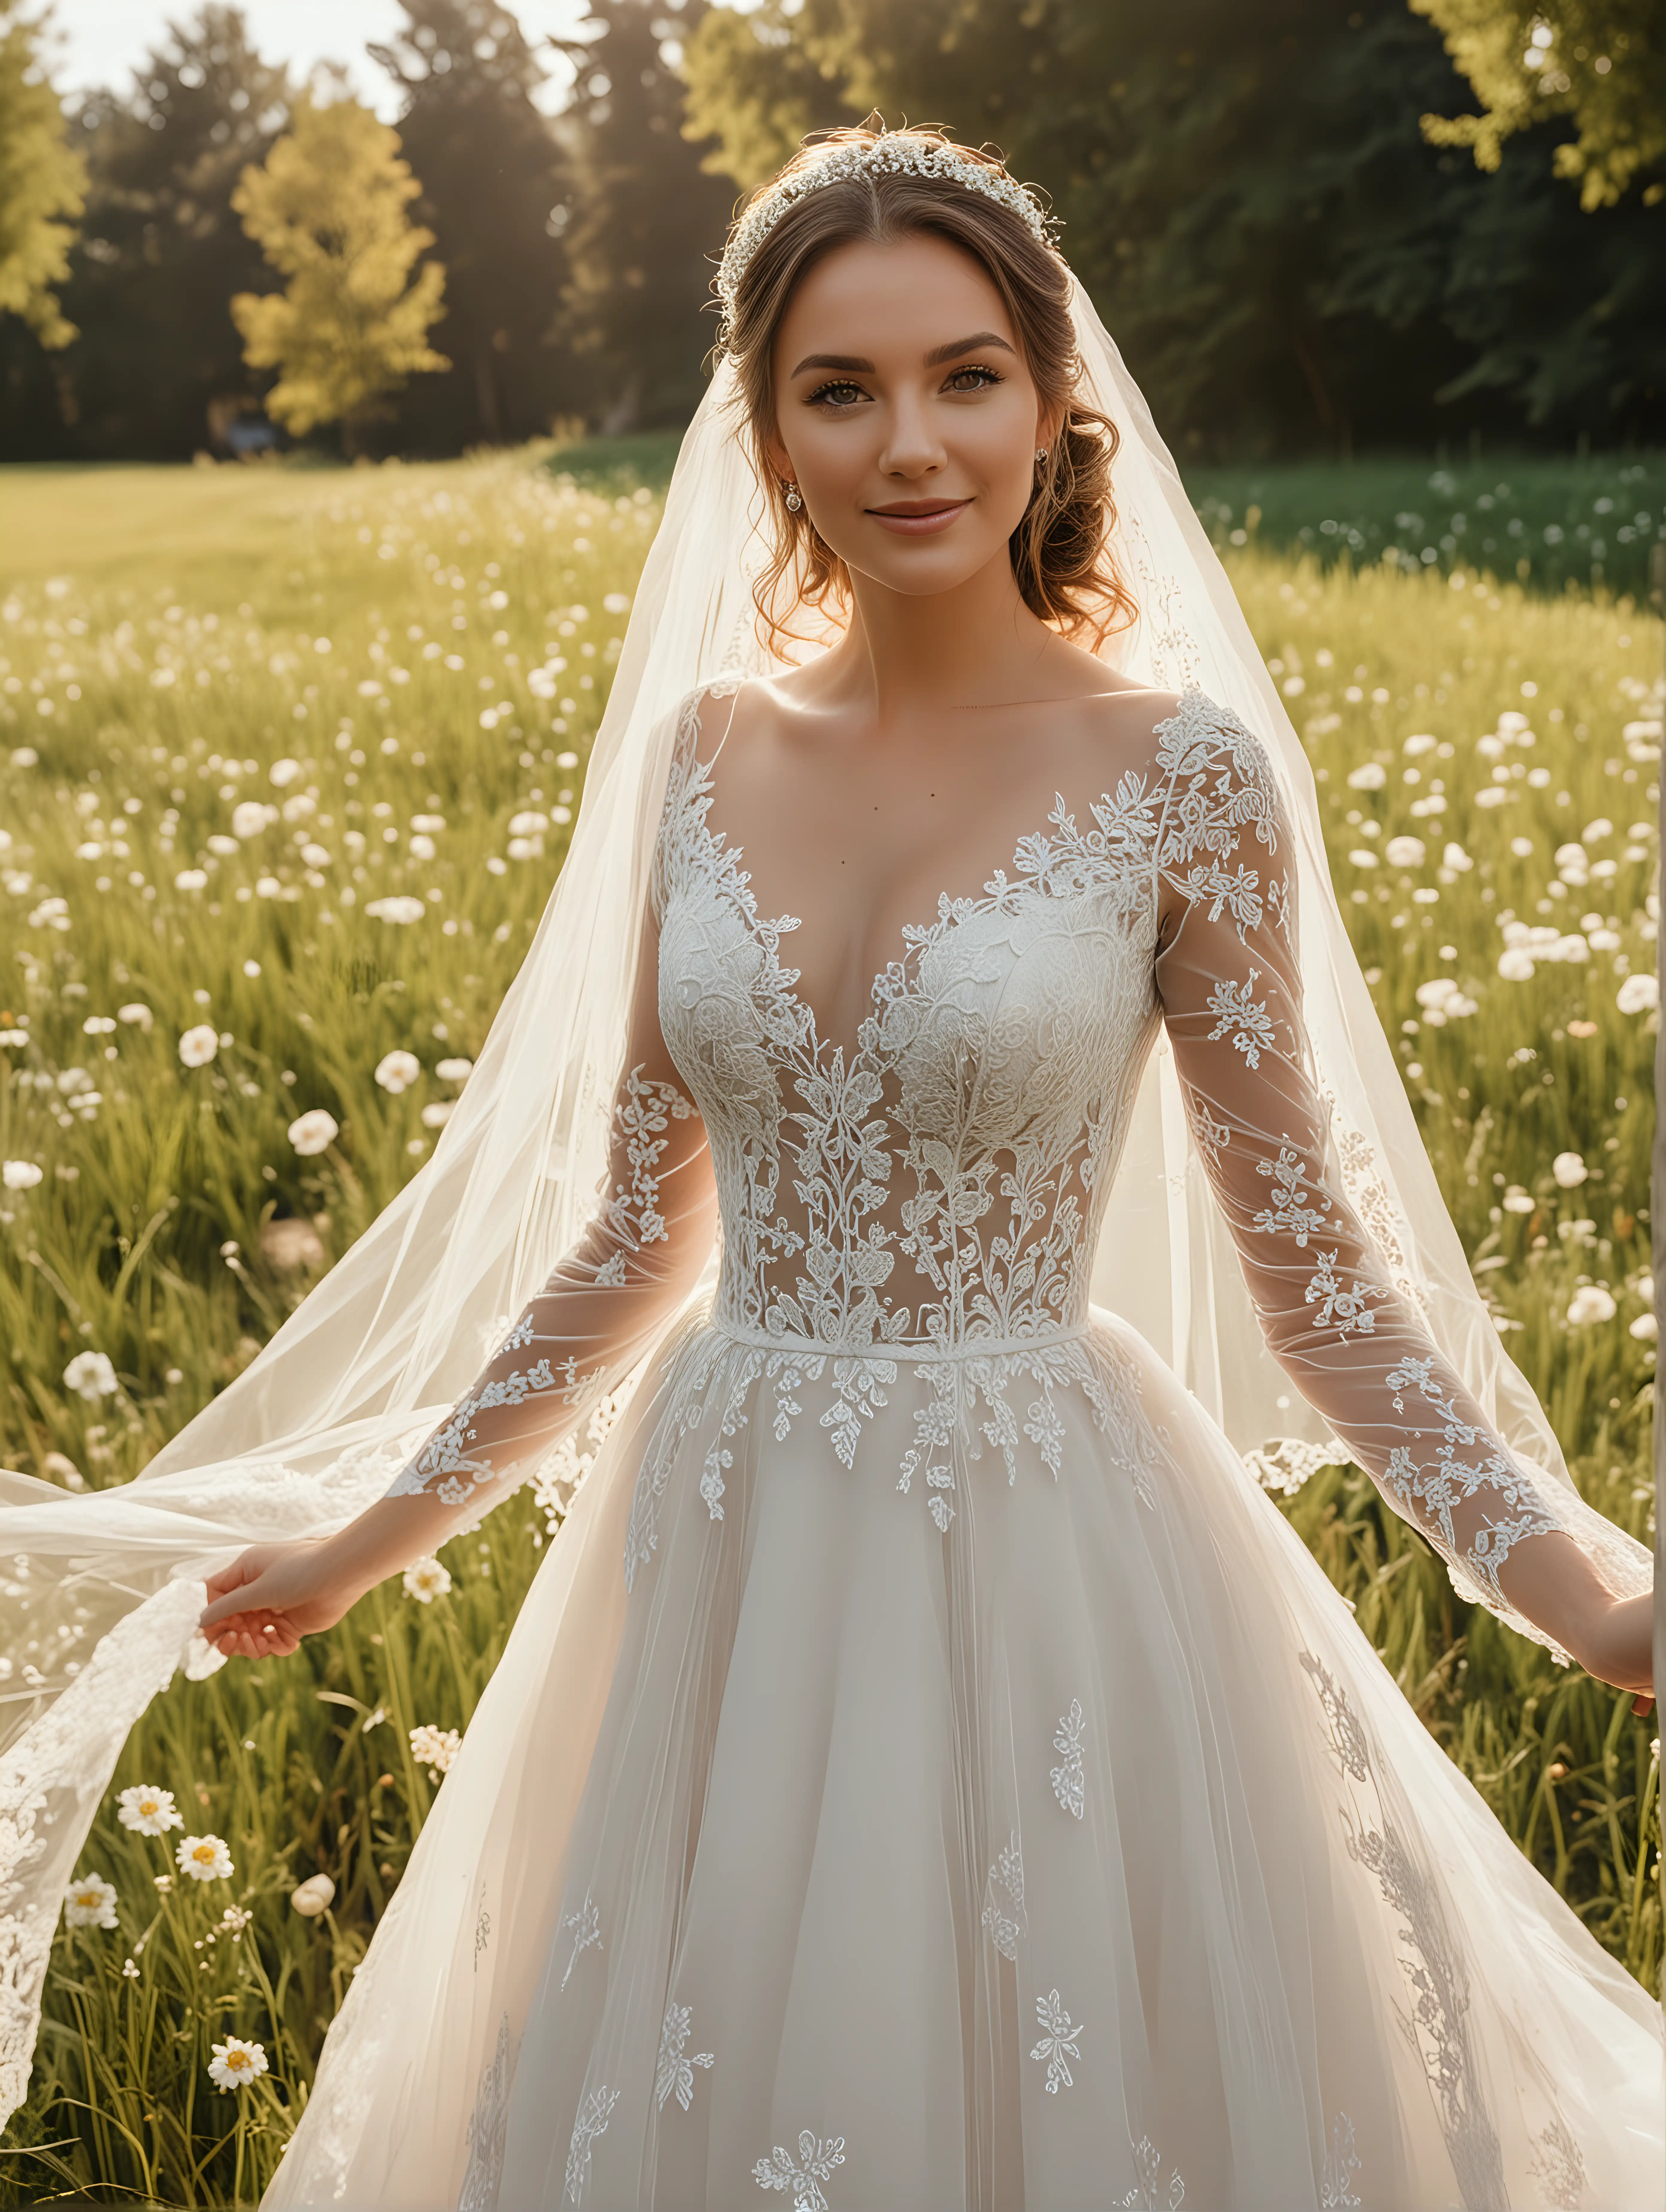 Joyful Bride in Elegant Wedding Dress Standing on Flowered Grass